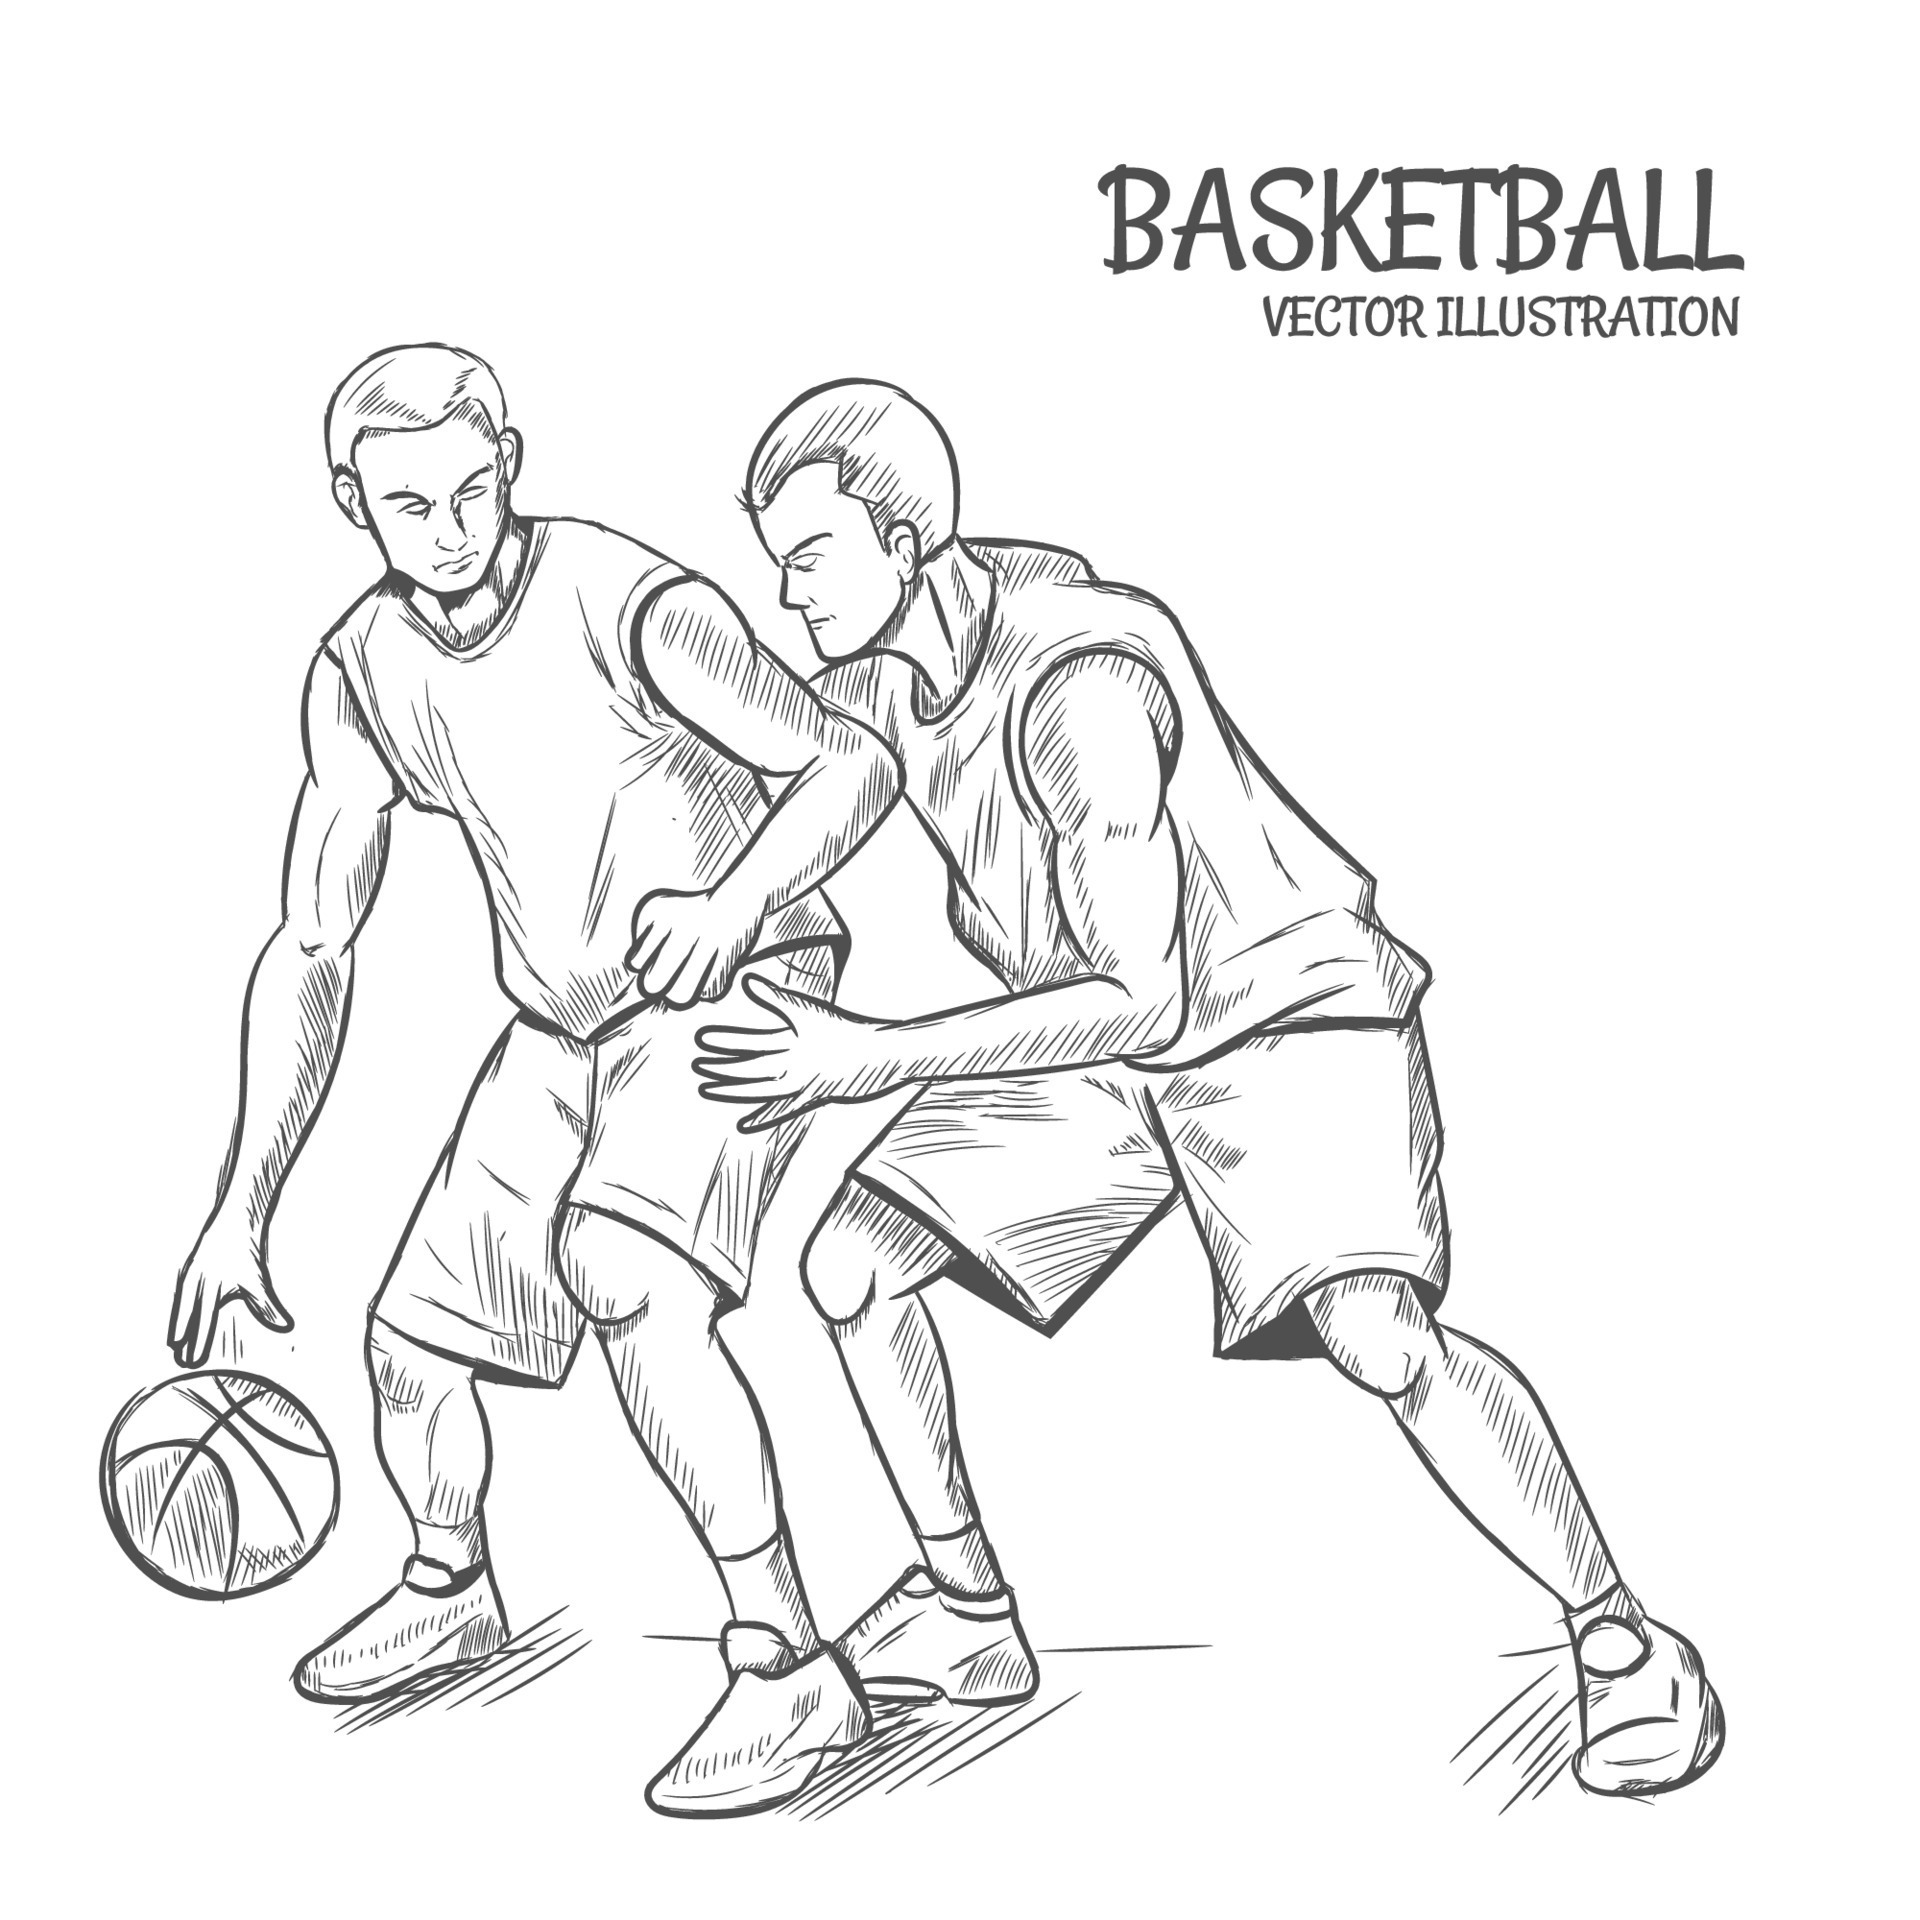 21 Fantastic Basketball Drawings to Download